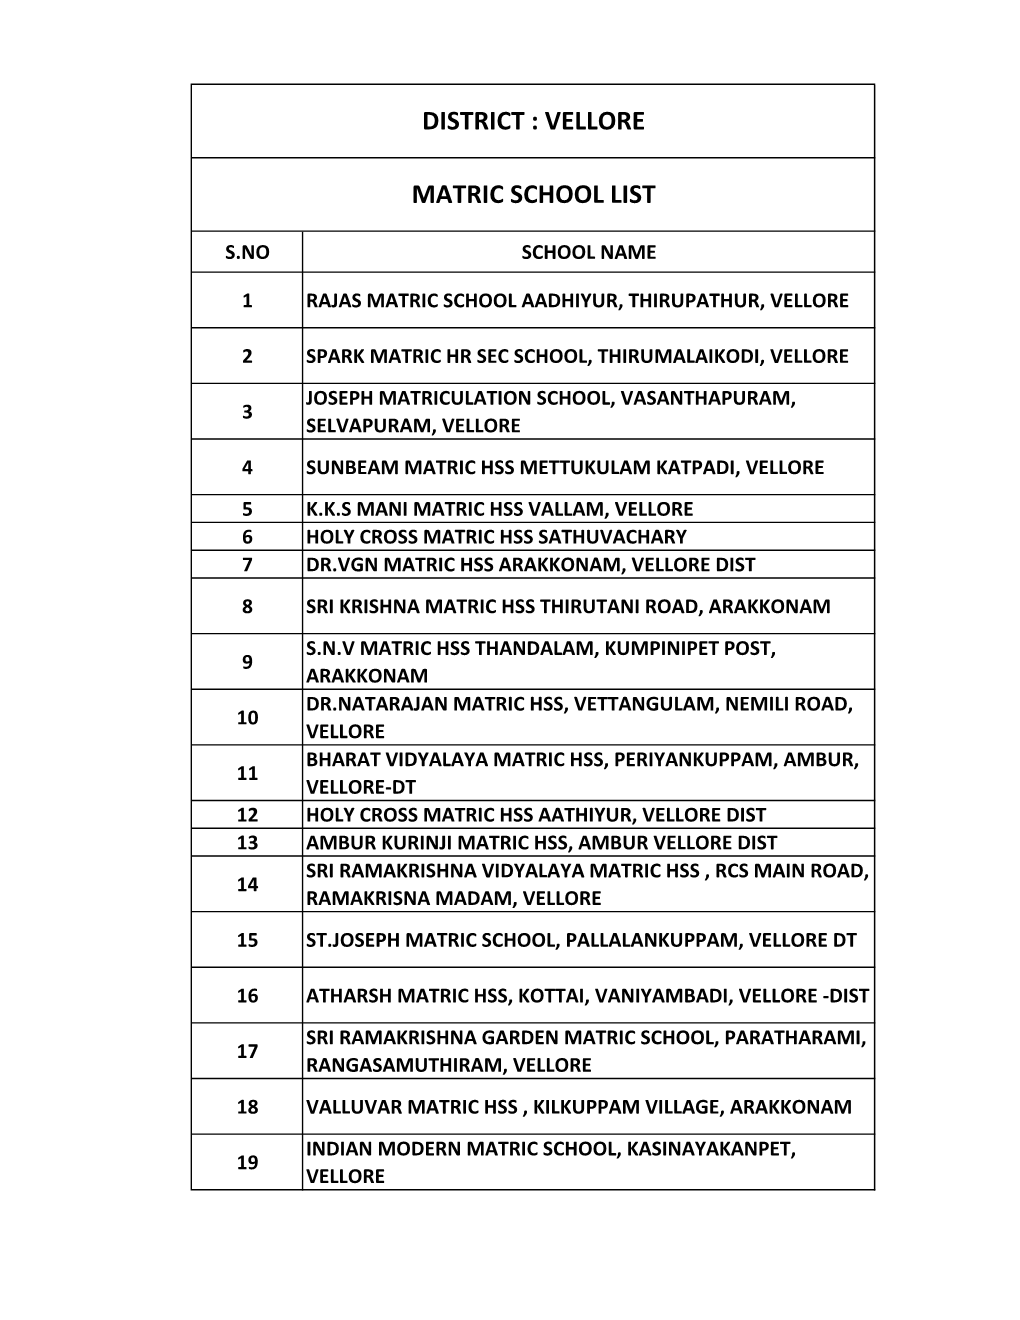 District : Vellore Matric School List